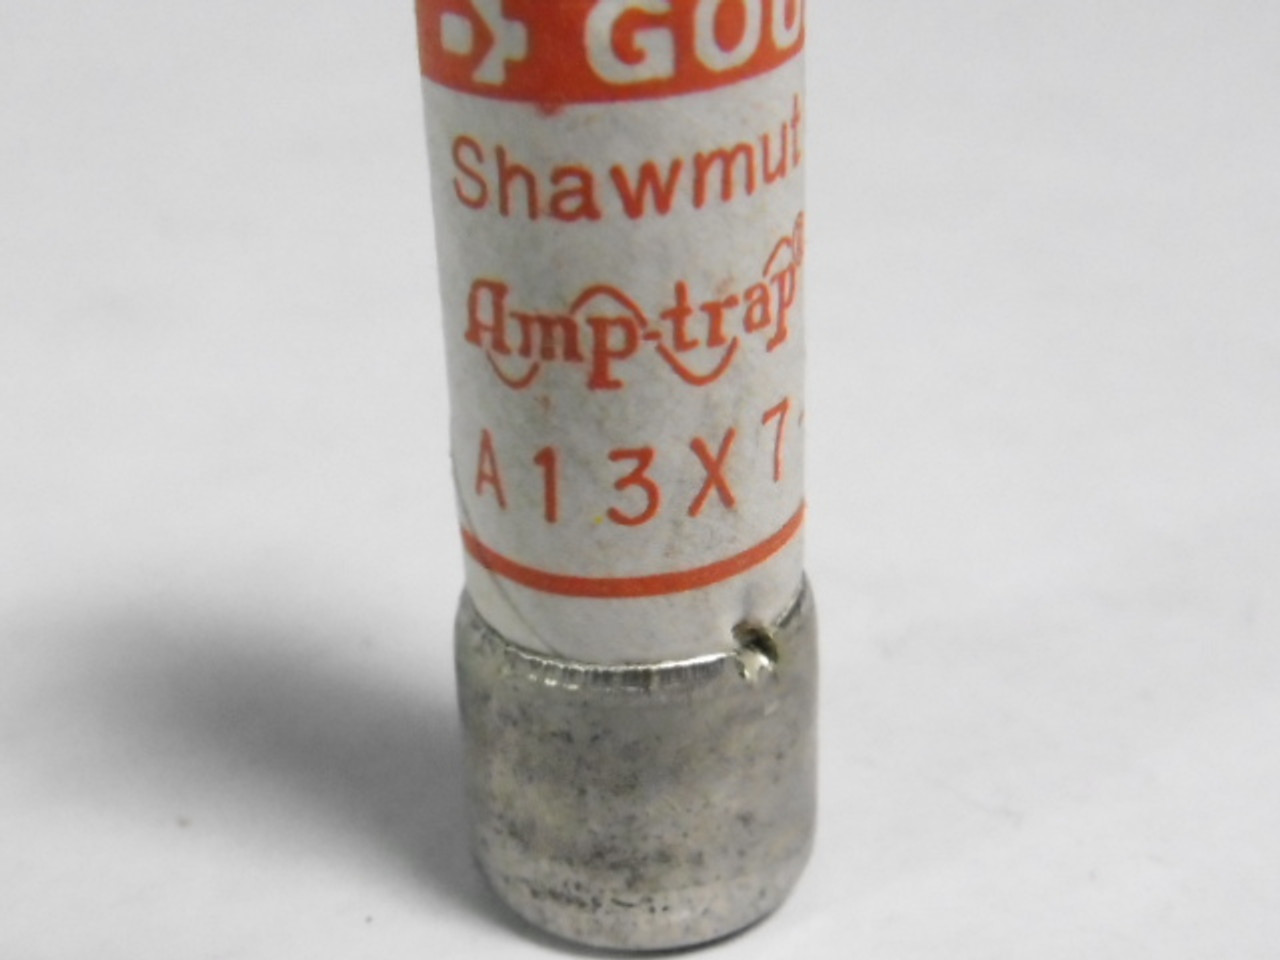 Gould Shawmut A13X7-2 Fuse 7A 130V USED